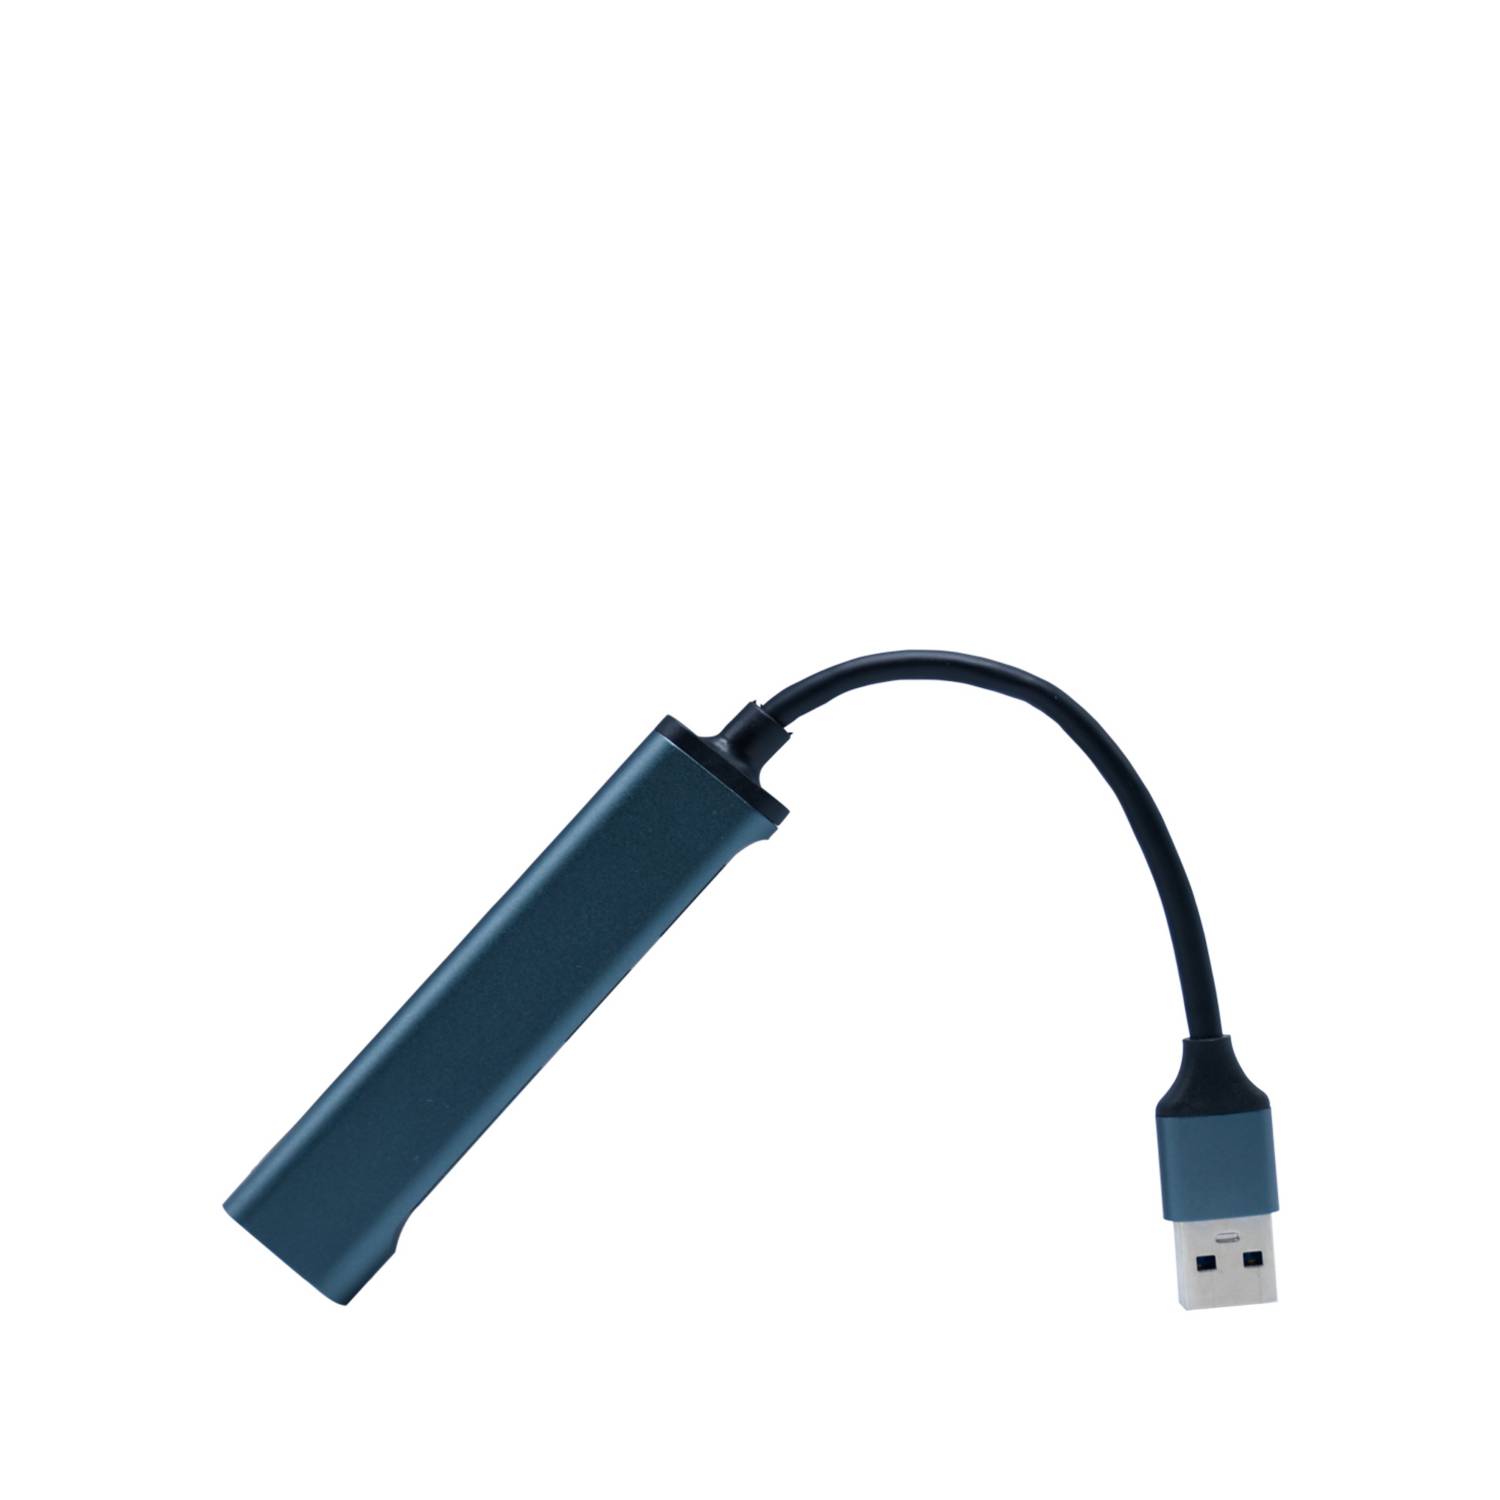  Cargador USB de coche 5 en 1 multipuerto, adaptador de